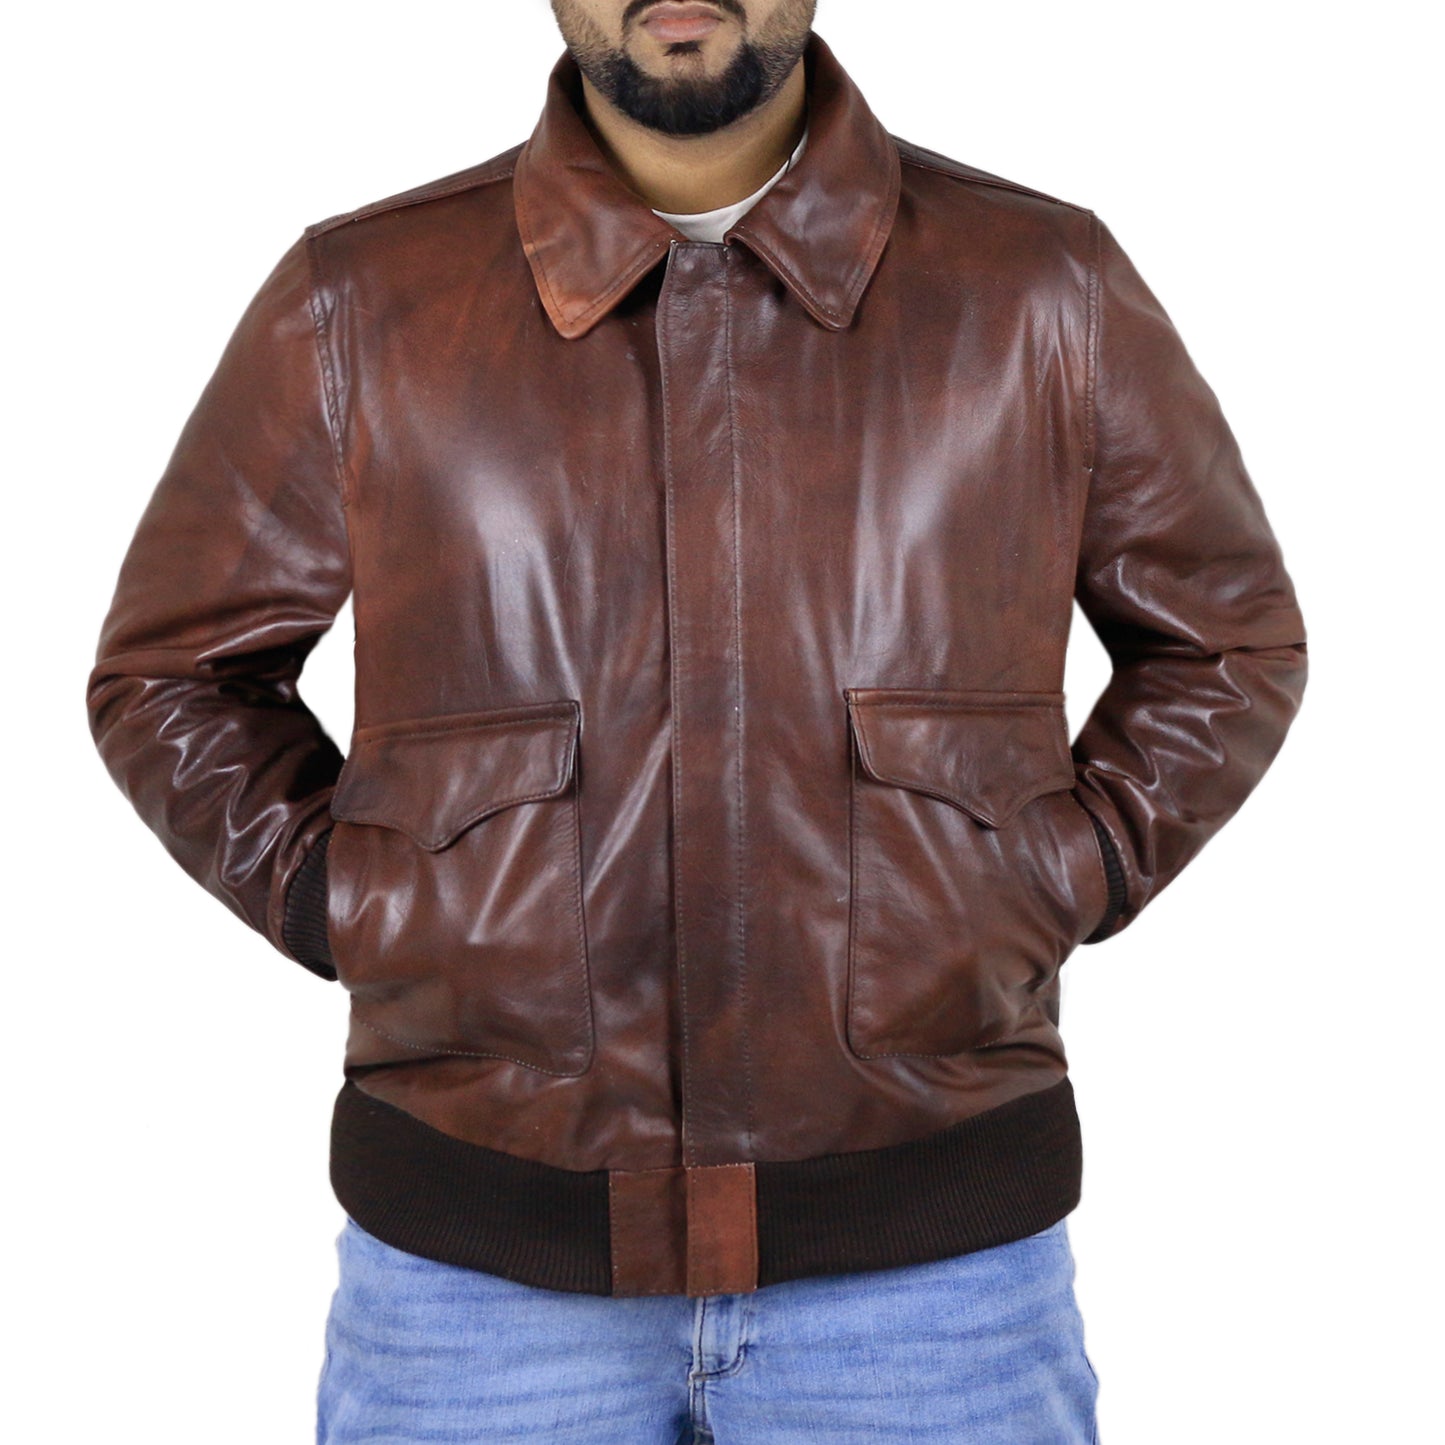 White@synara-distressed-brown-aviator-leather-jacket